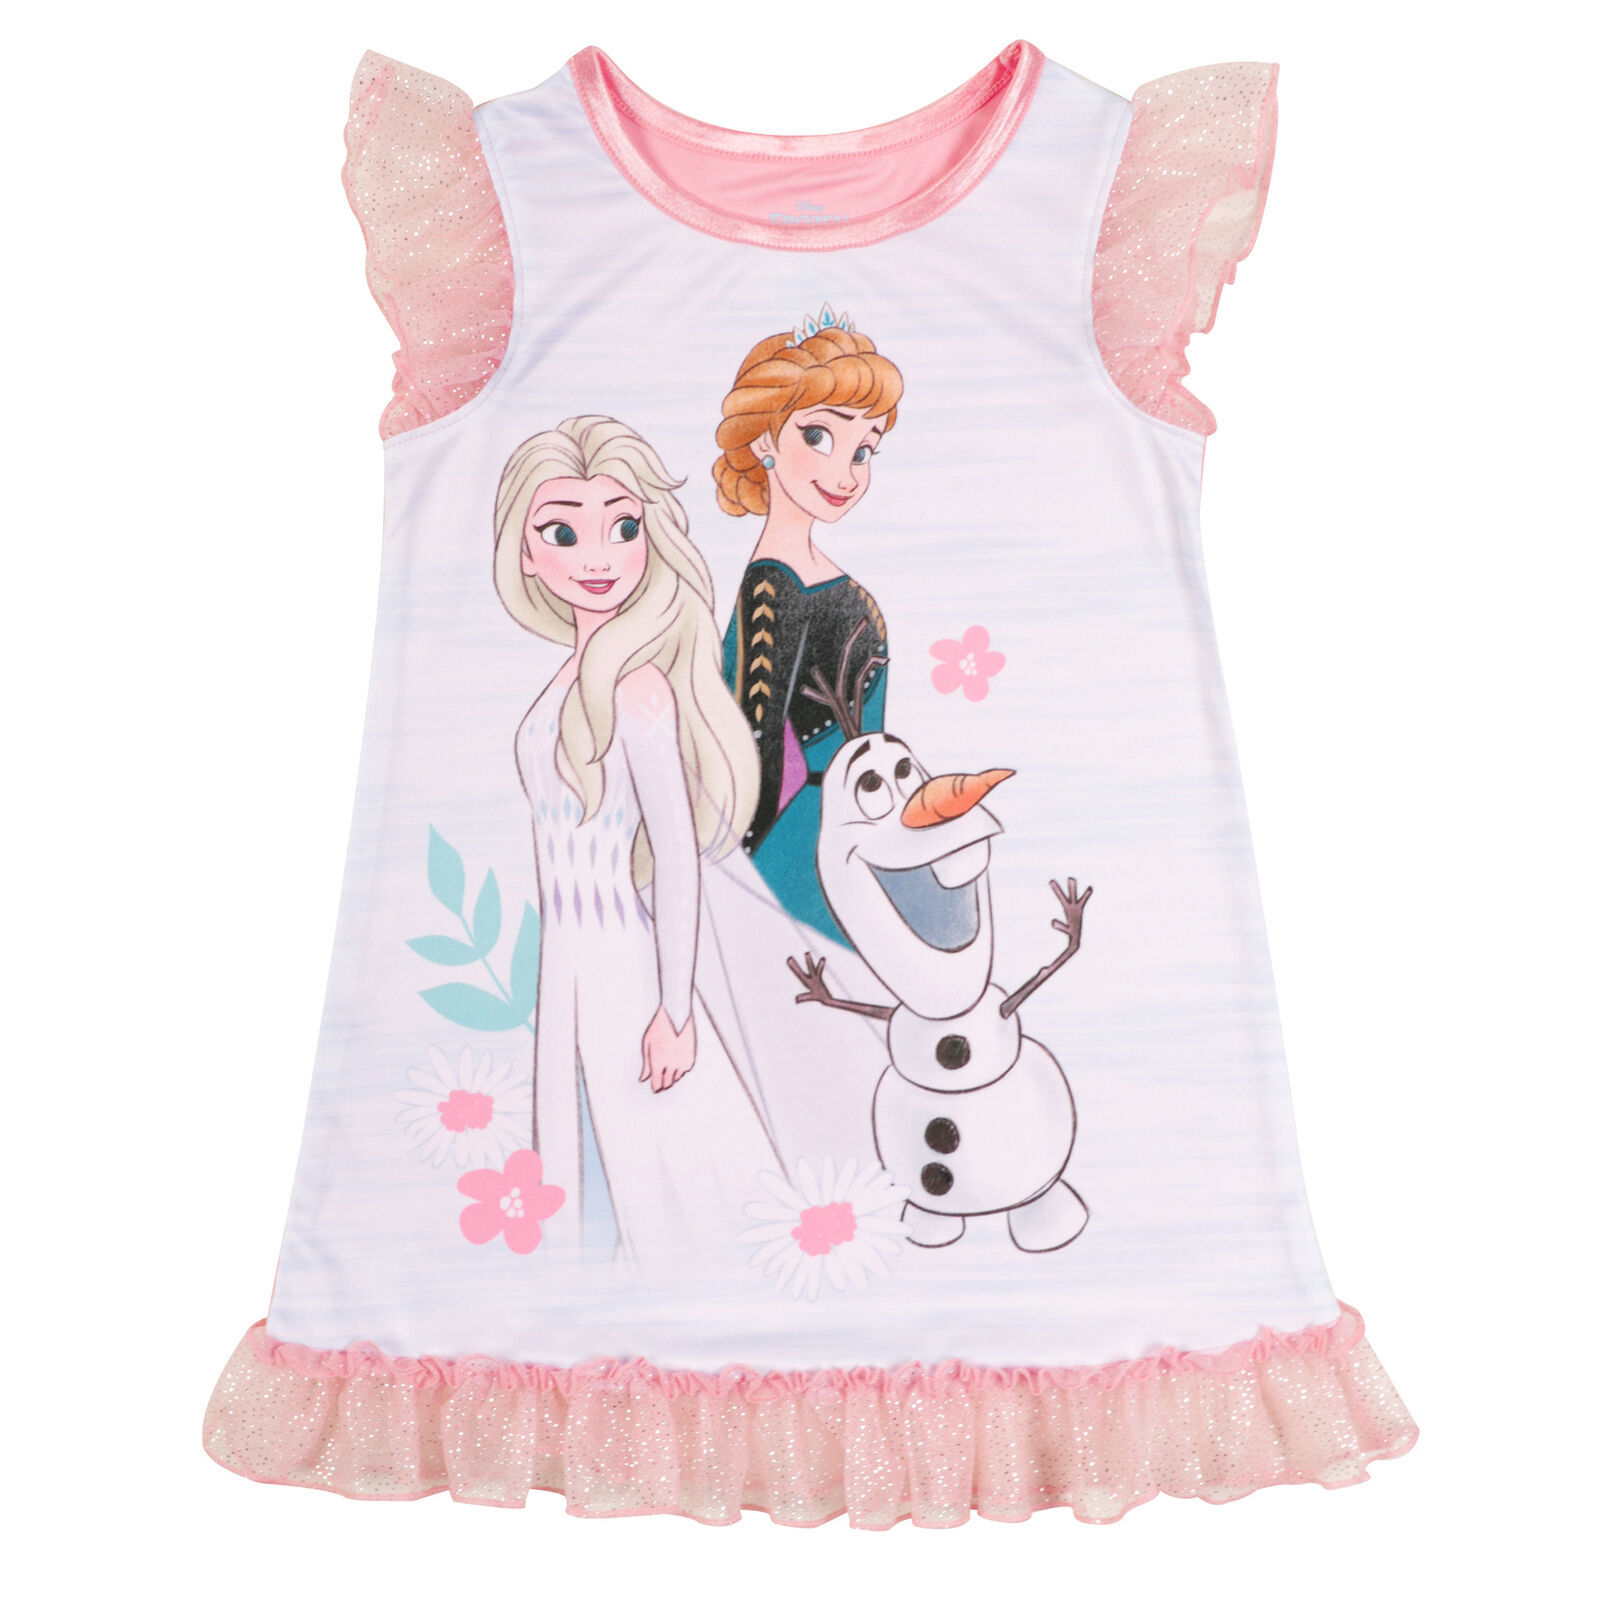 Disney's Frozen Cast Toddler Night Gown Pajamas Multi-Color - $26.98